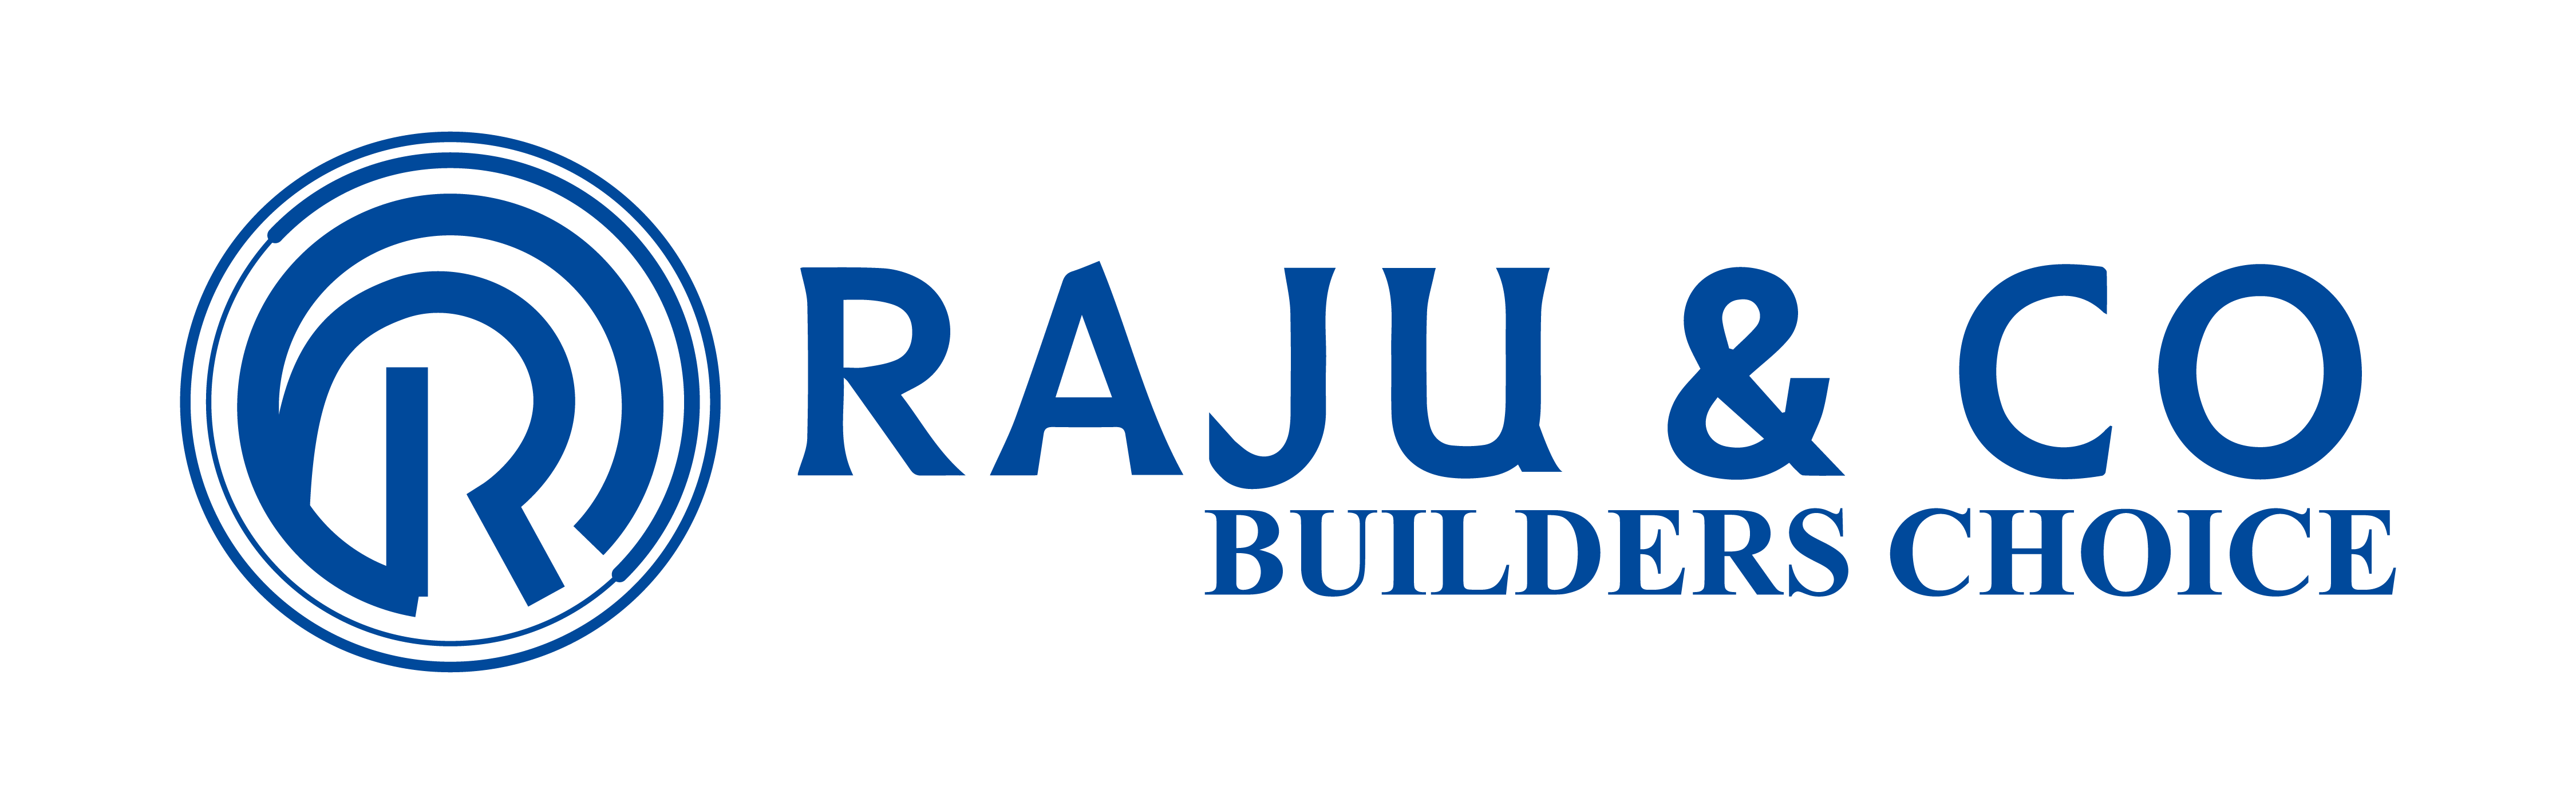 Raju & Co_Logo-01